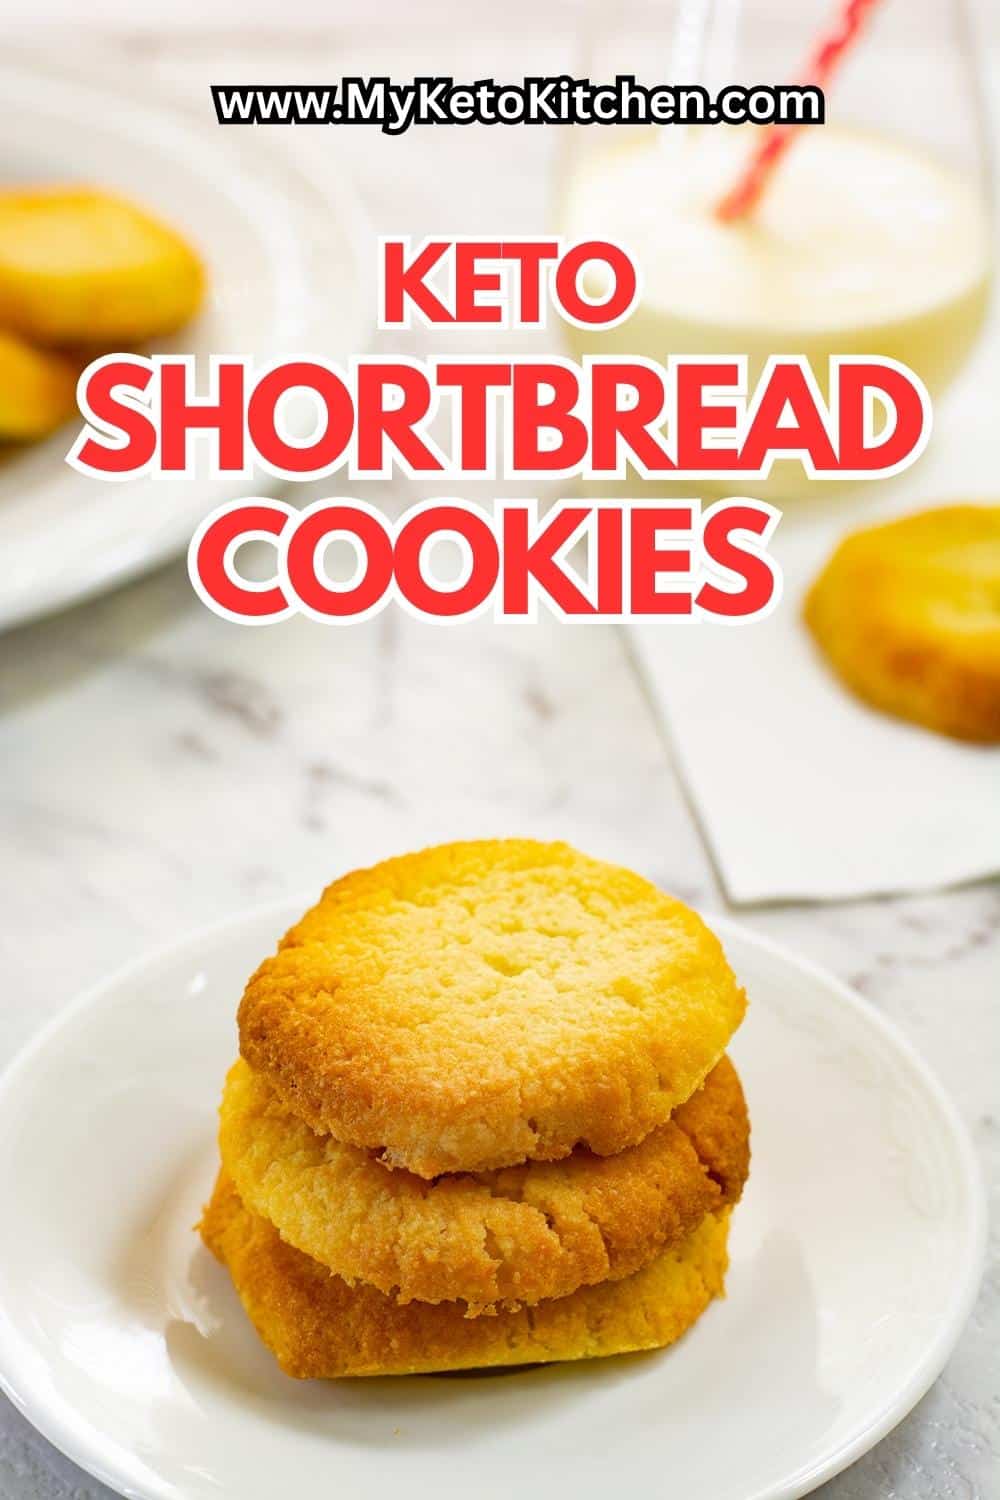 The Best Keto Shortbread Cookies Recipe (1g Carbs)